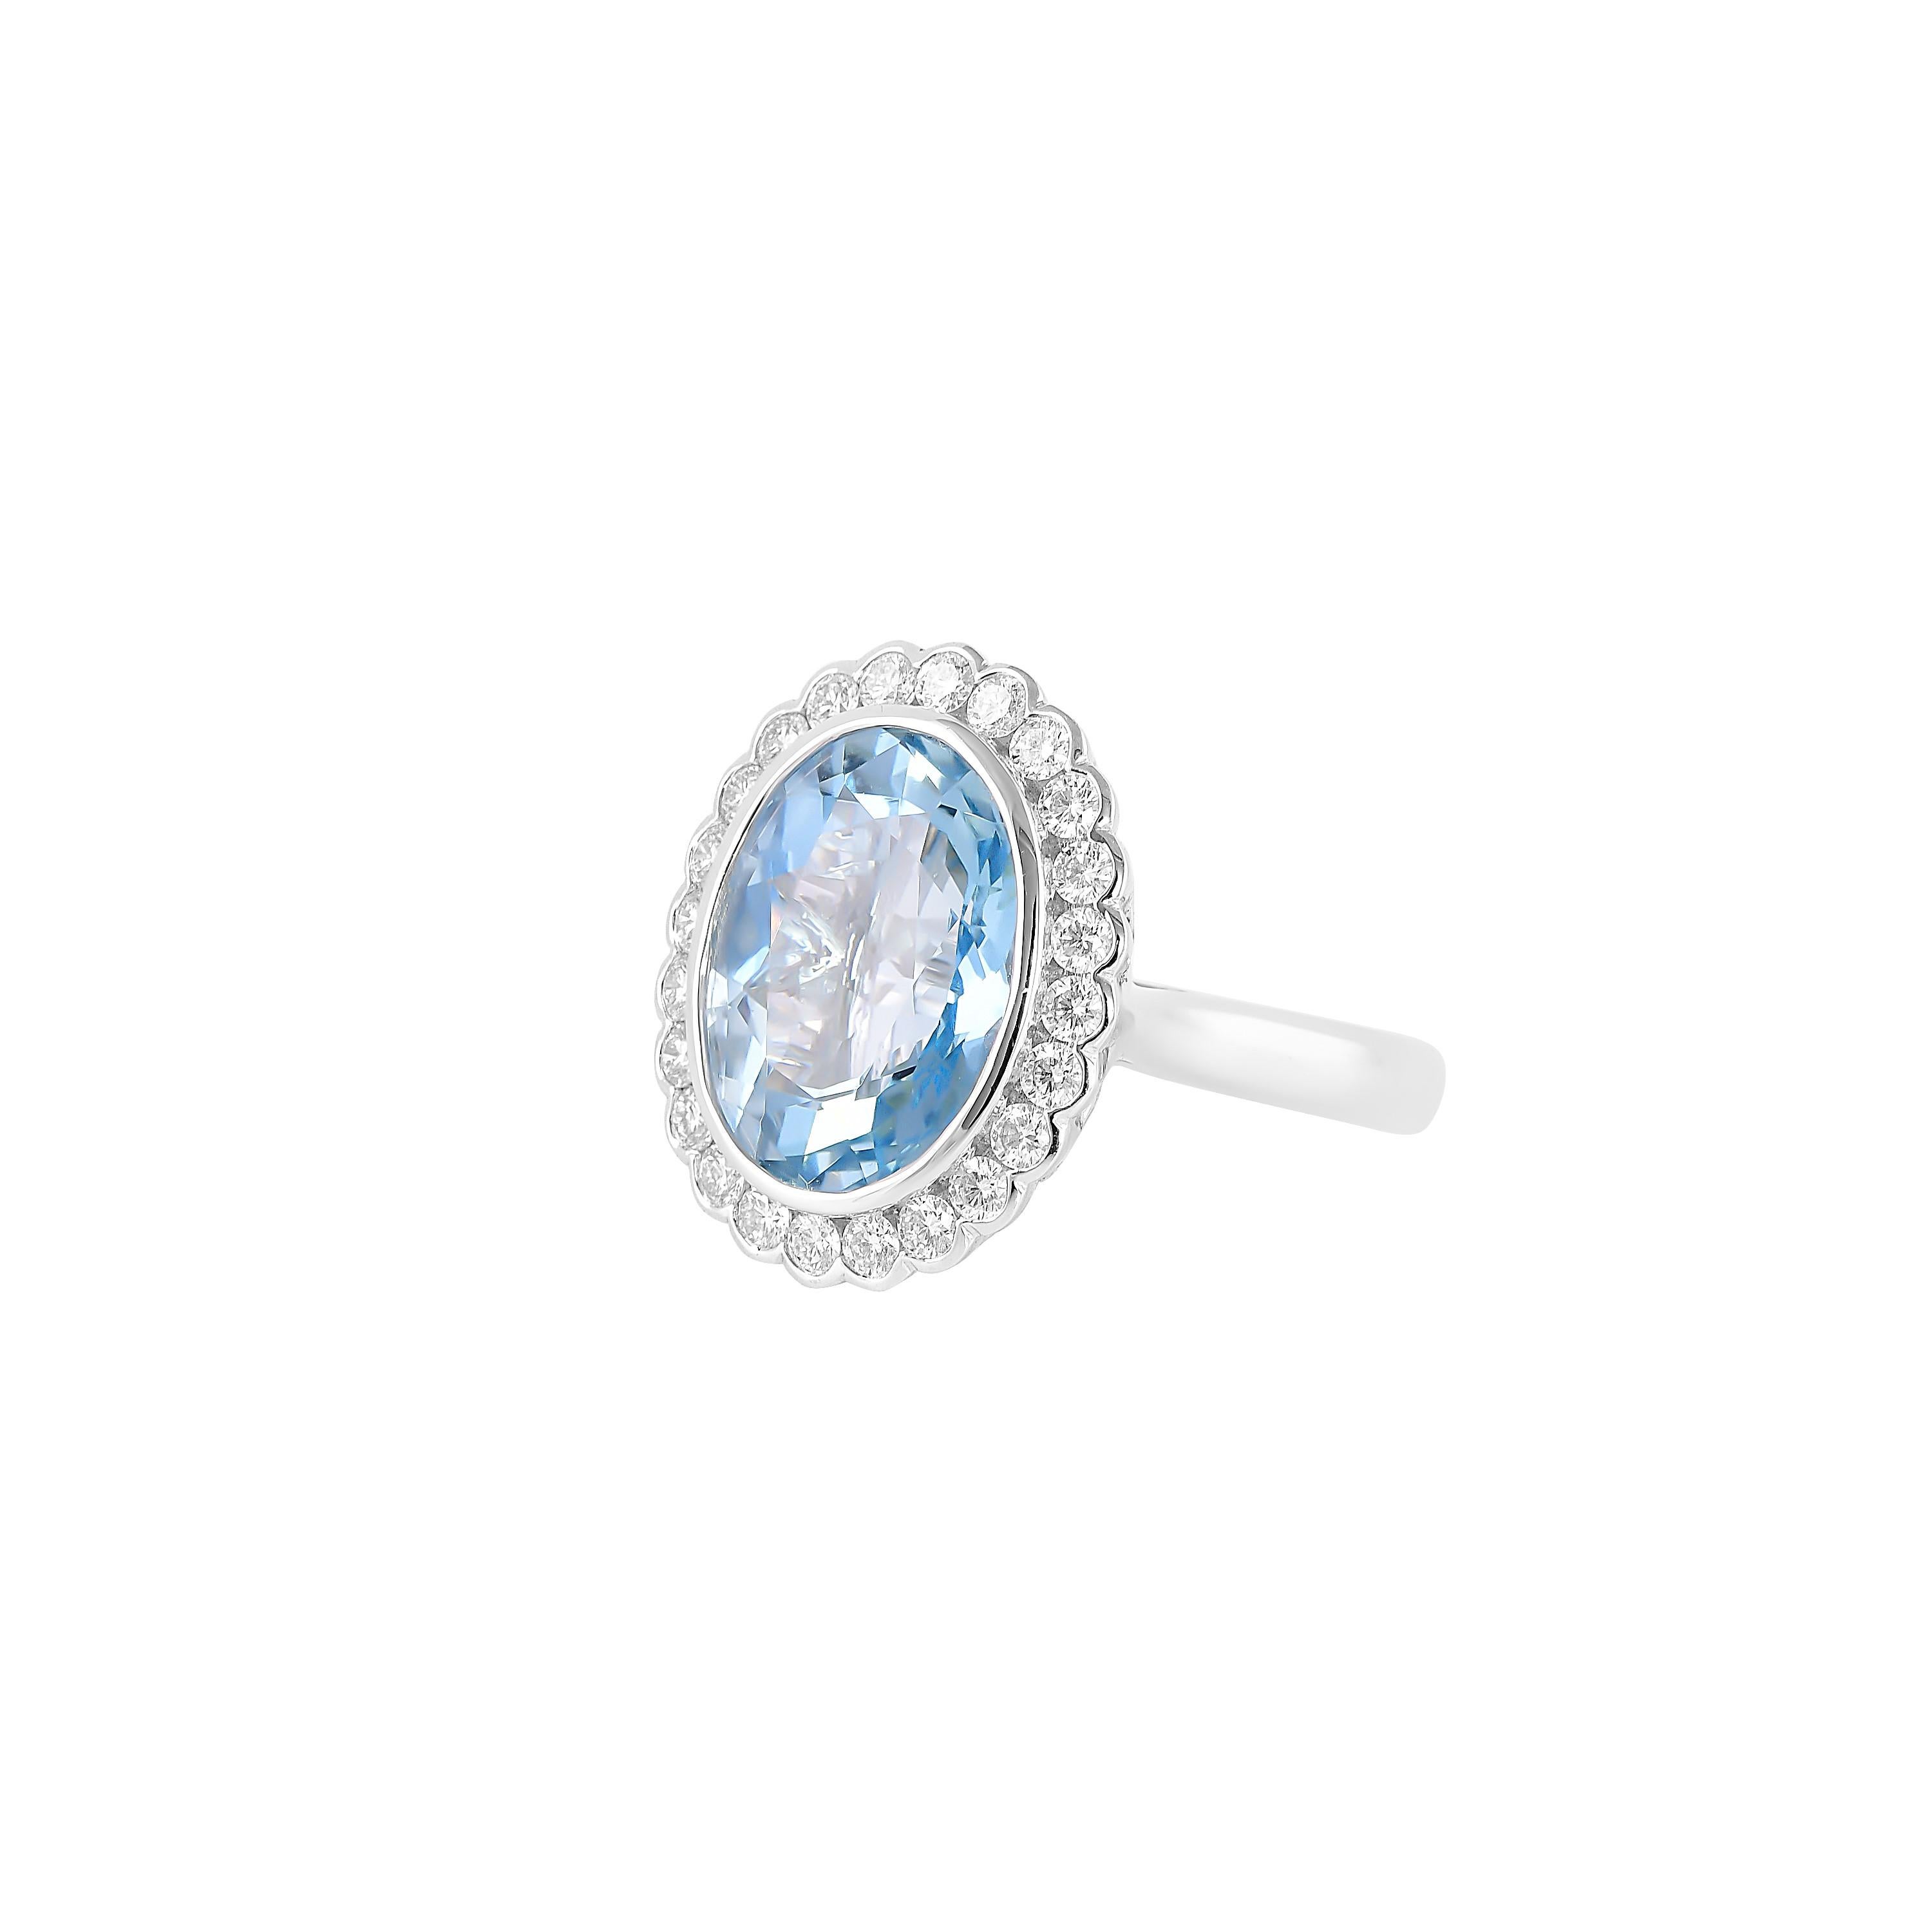 Contemporary 7.1 Carat Aquamarine and Diamond Ring in 18 Karat White Gold For Sale